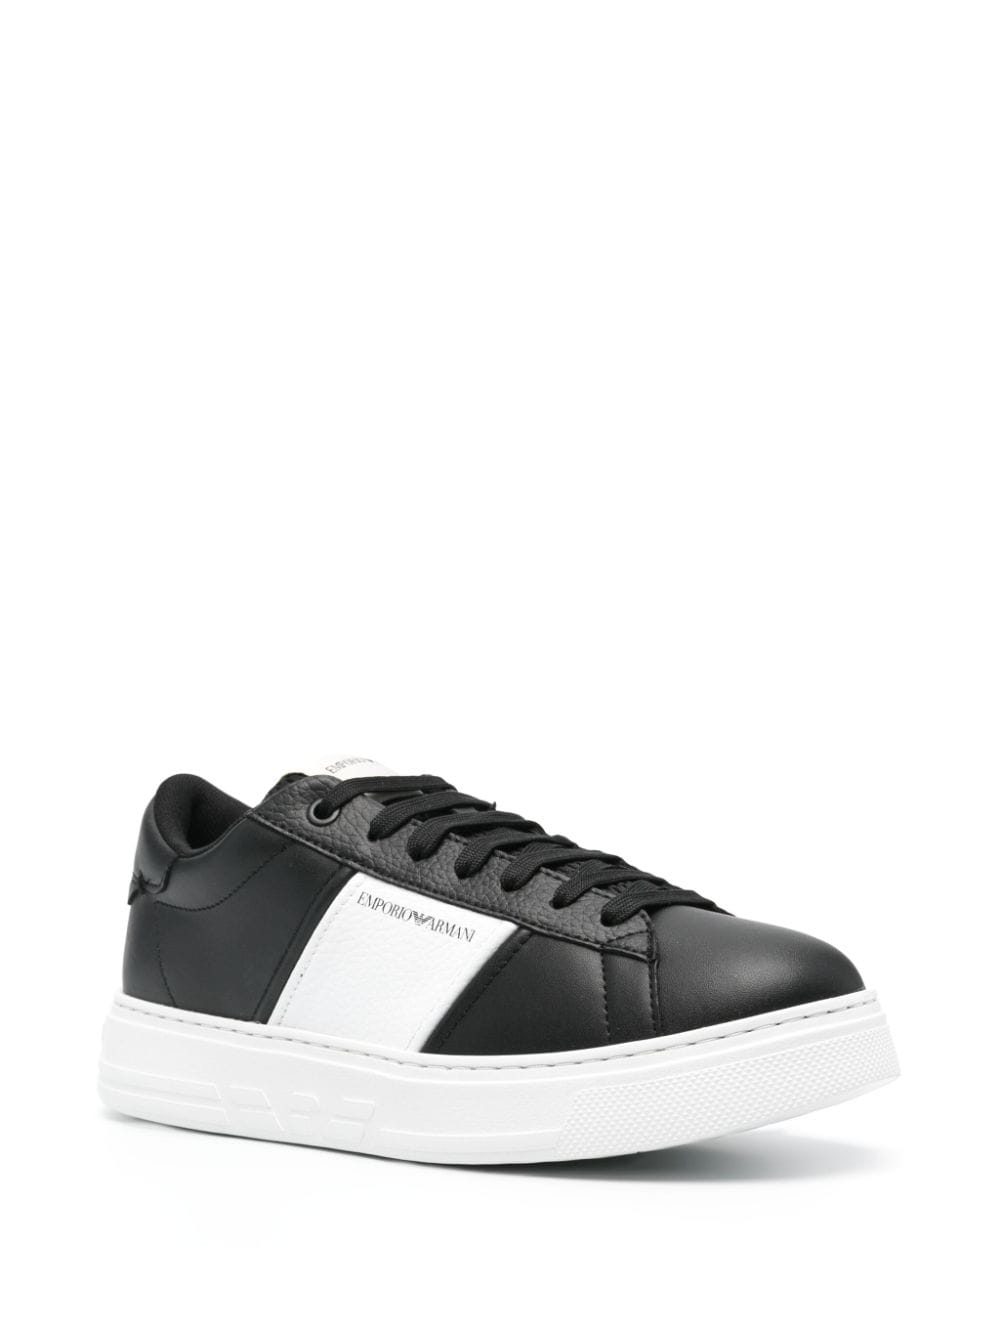 Emporio Armani Sneakers Black